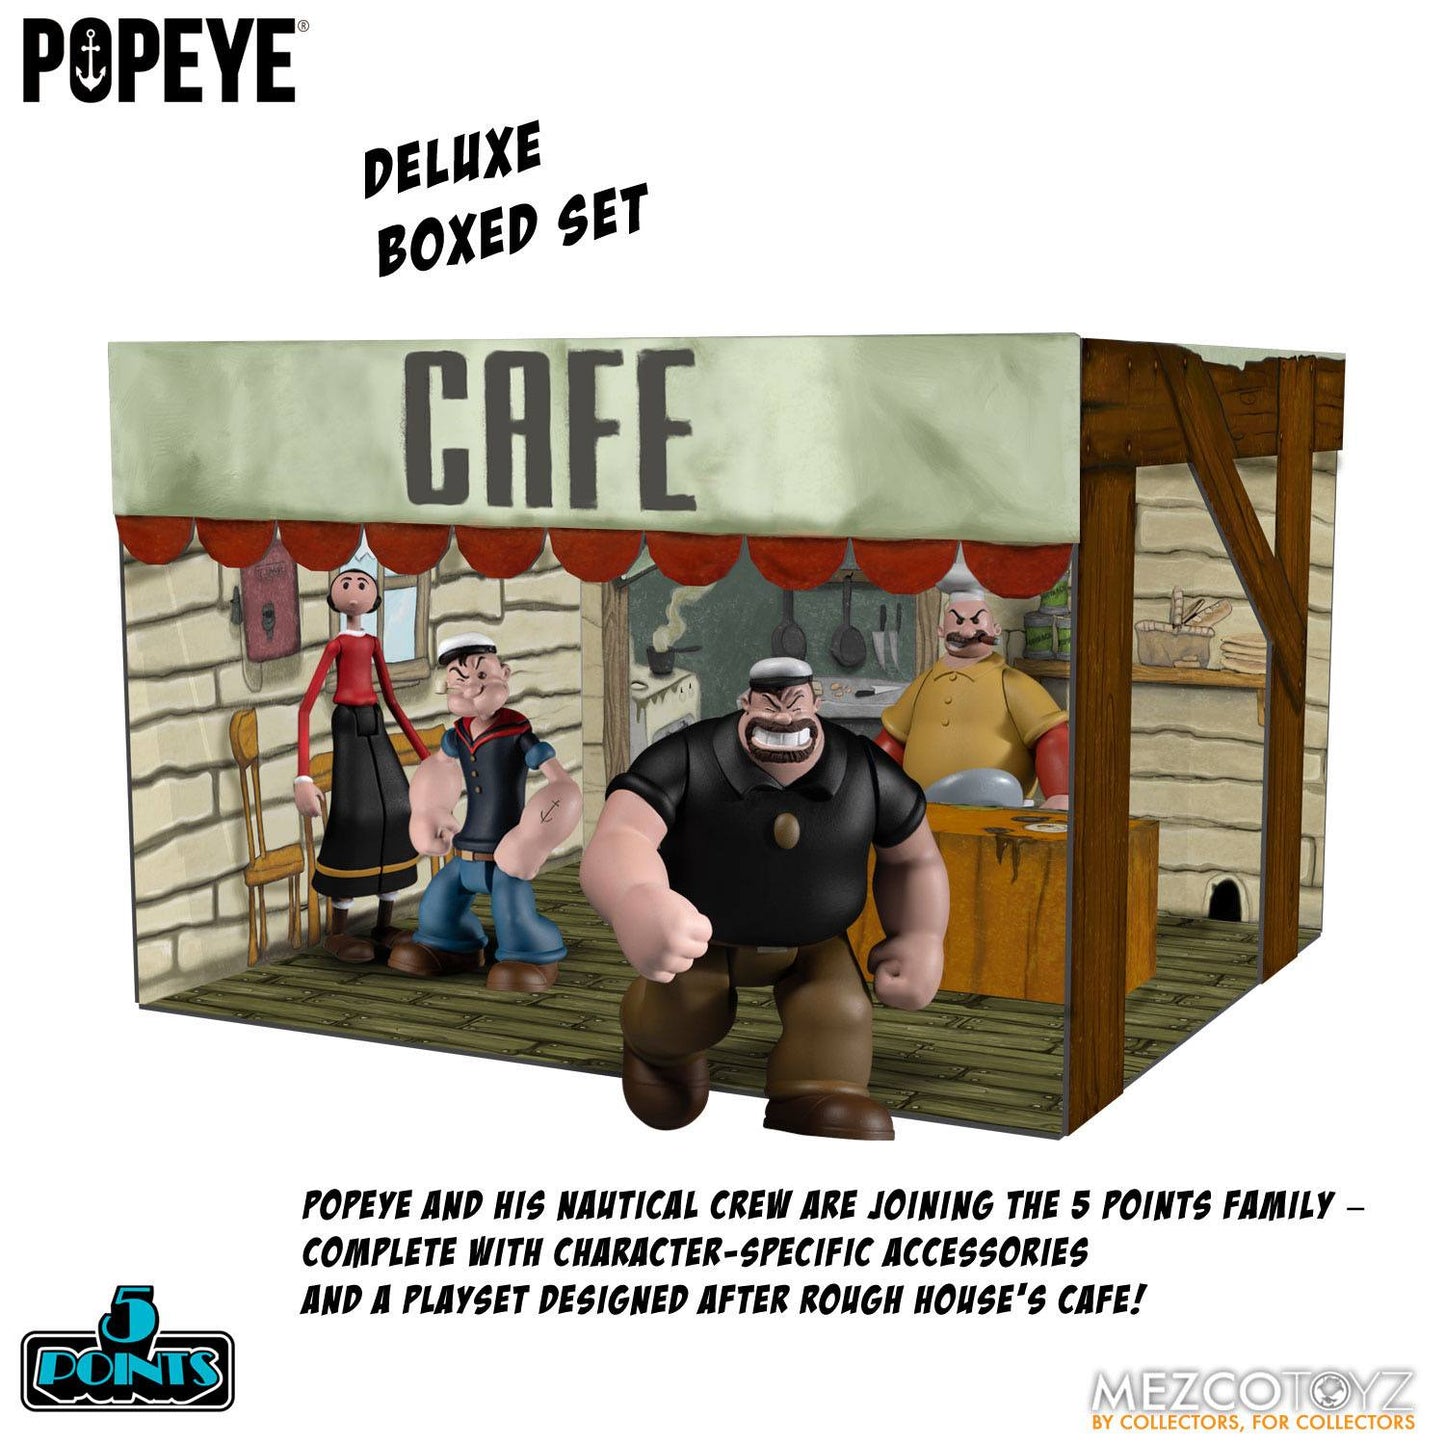 Popeye 5 Points Deluxe Box Set 9 cm